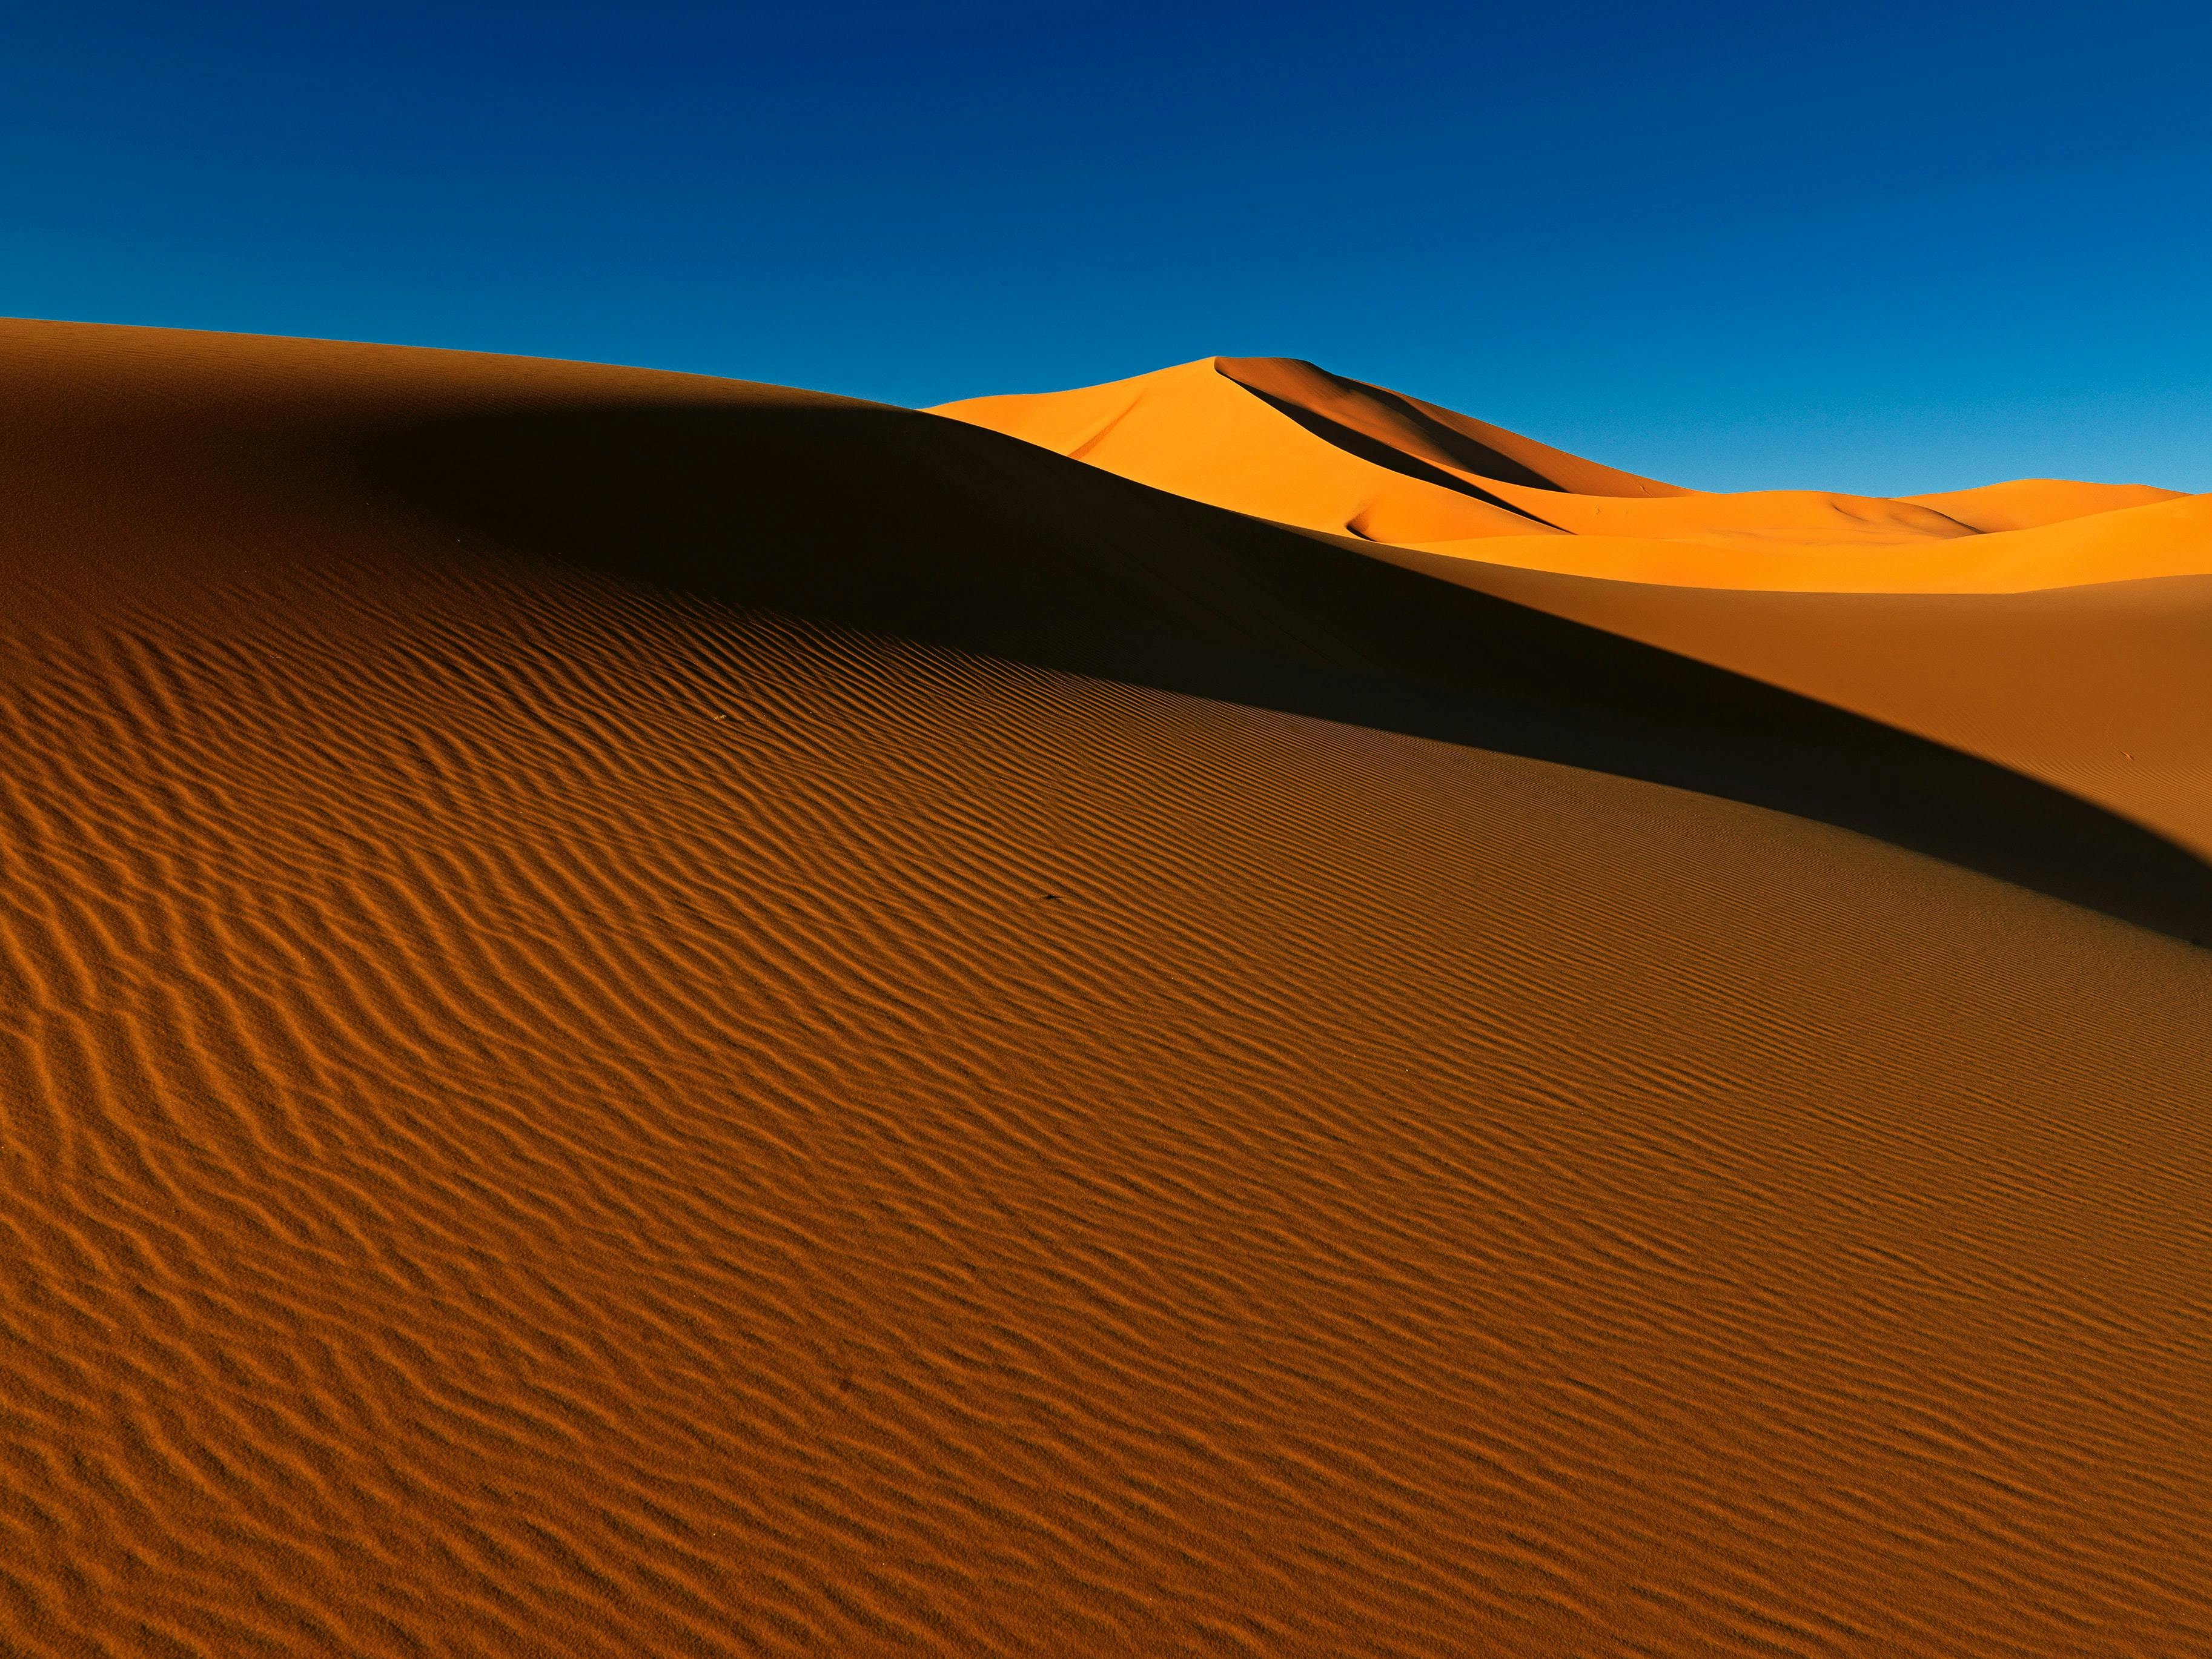 Bright orange sand dunes against a bright blue sky